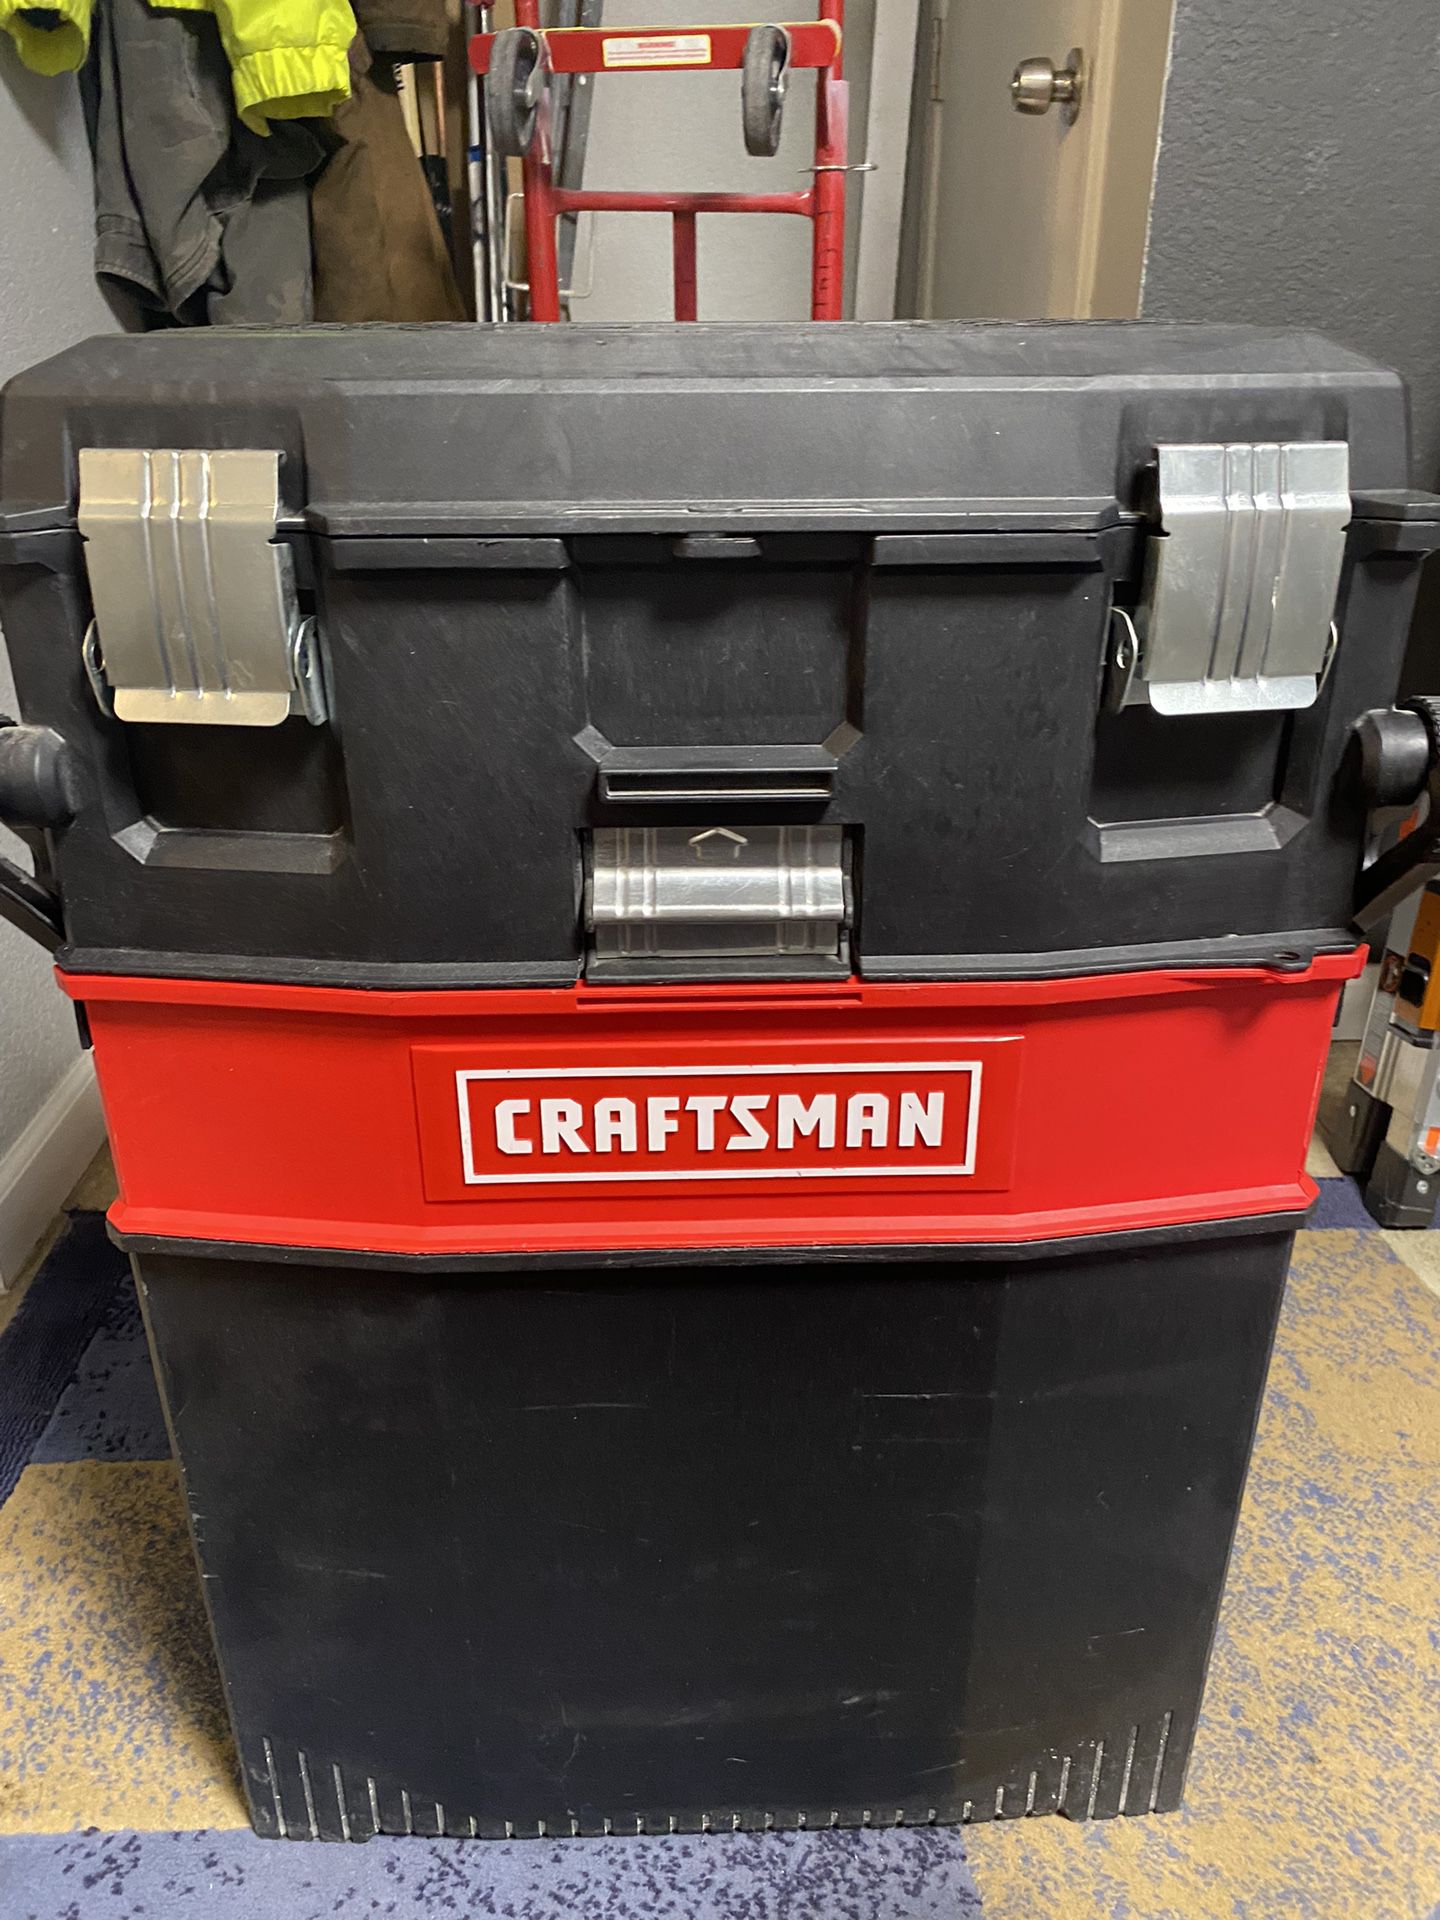 Craftsman rollaway toolbox